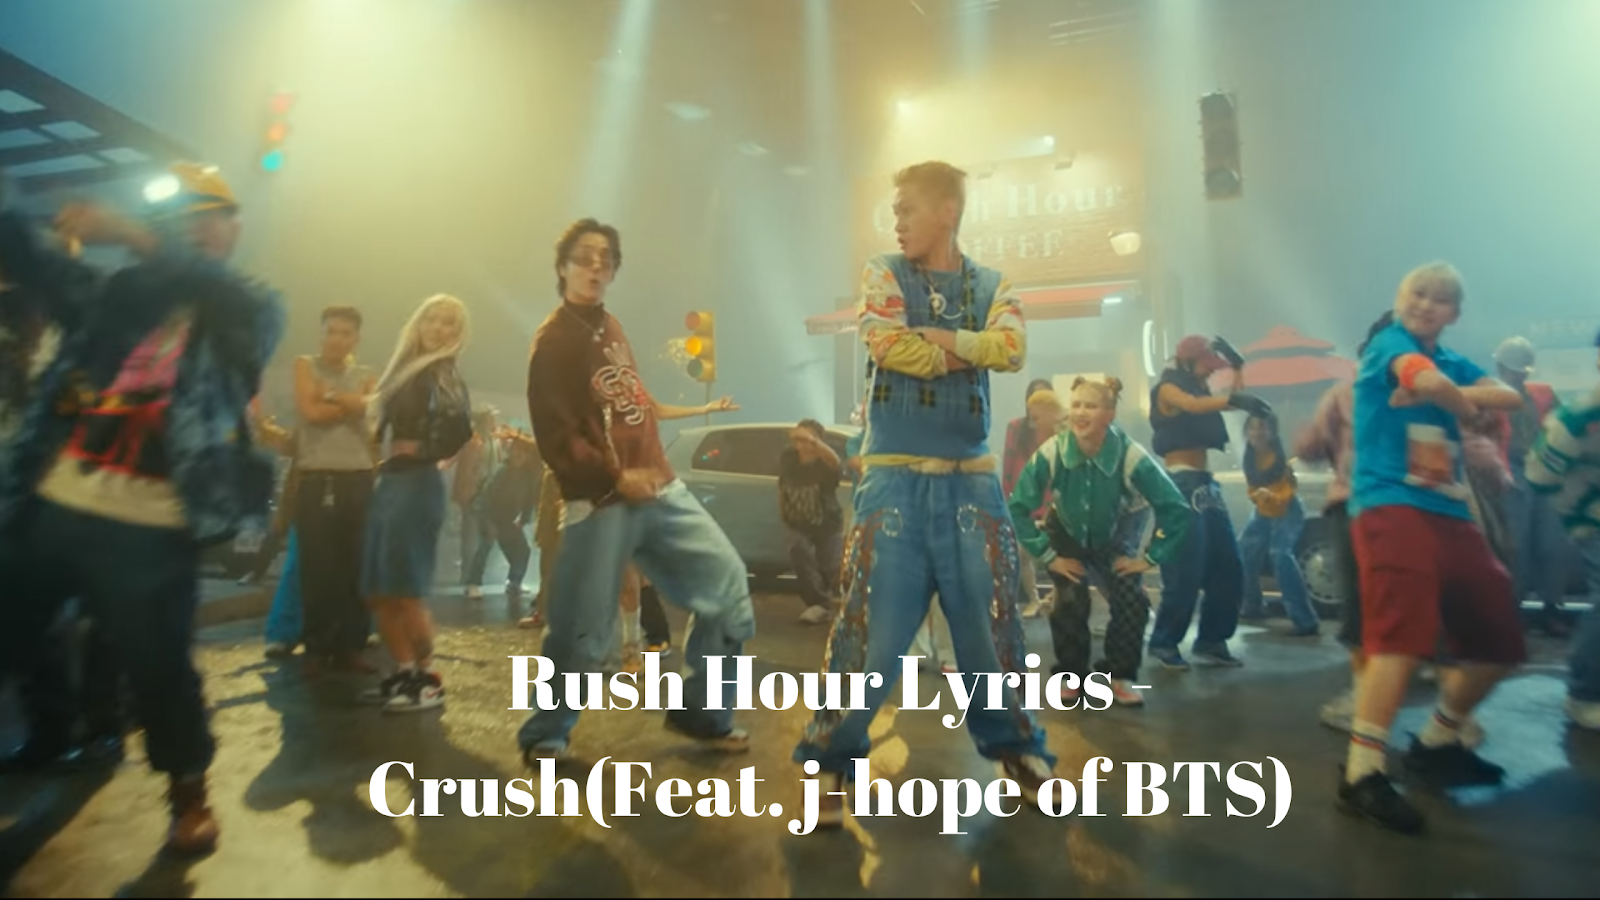 Rush Hour Lyrics -Crush(Feat. j-hope of BTS)